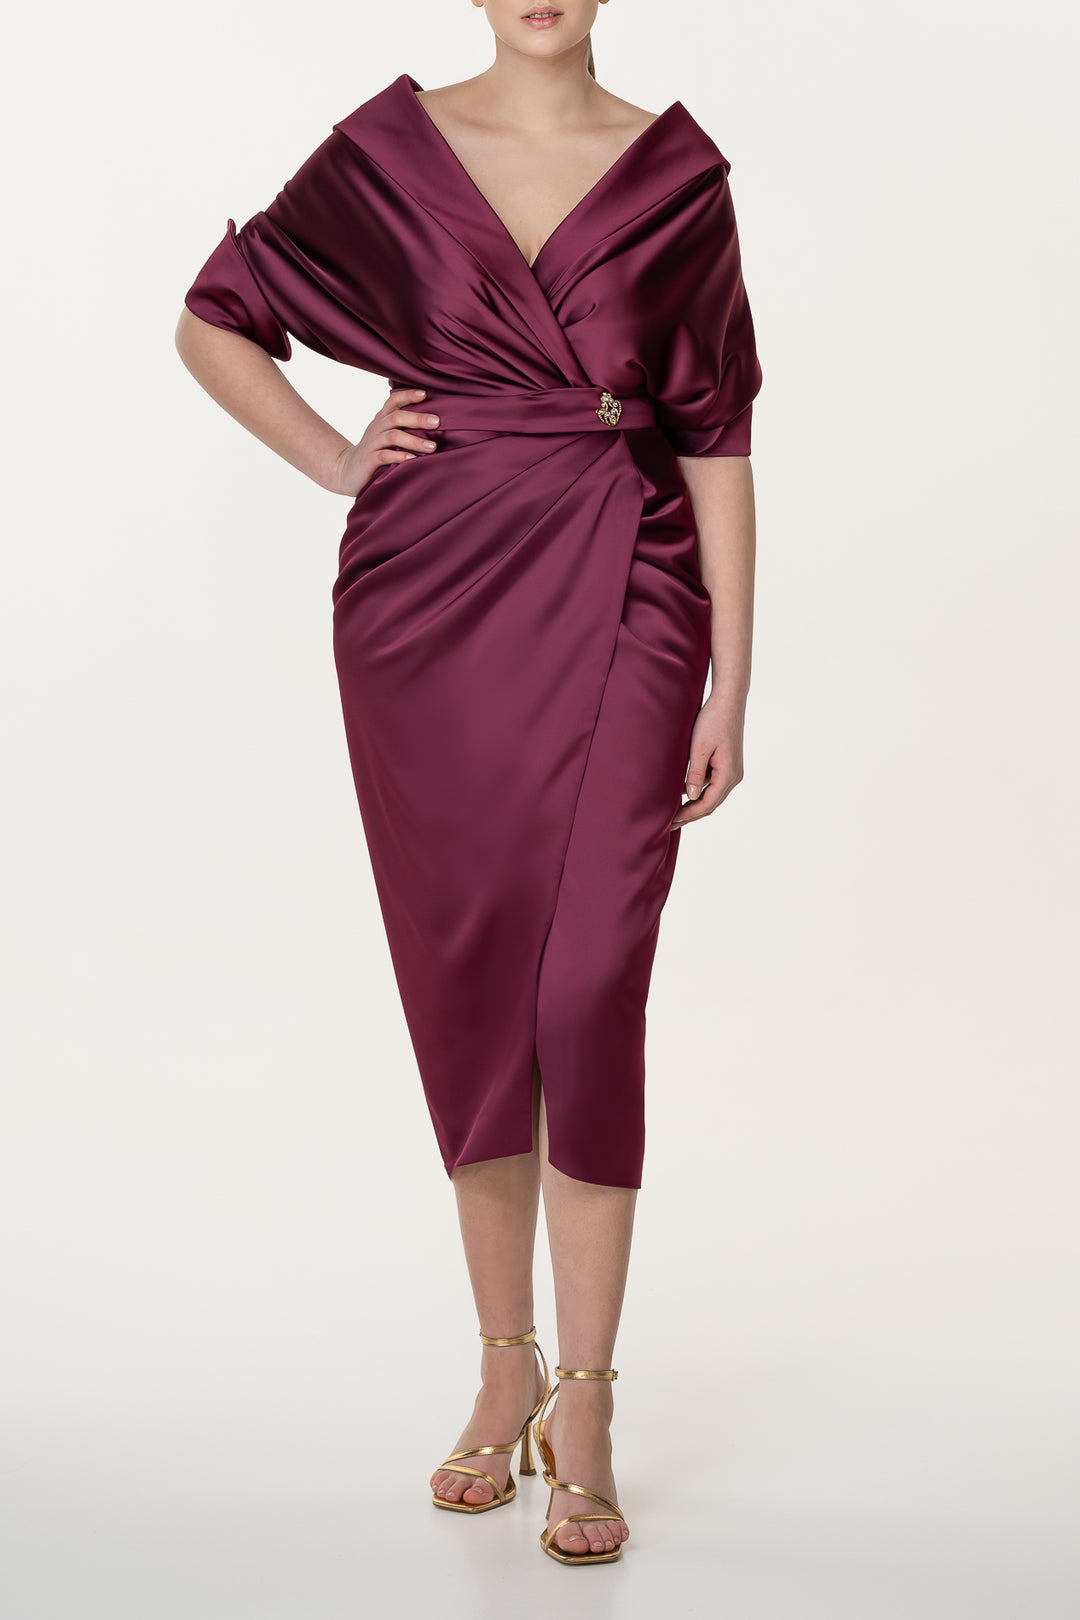 Angelina Midi Burgundy Satin Dress